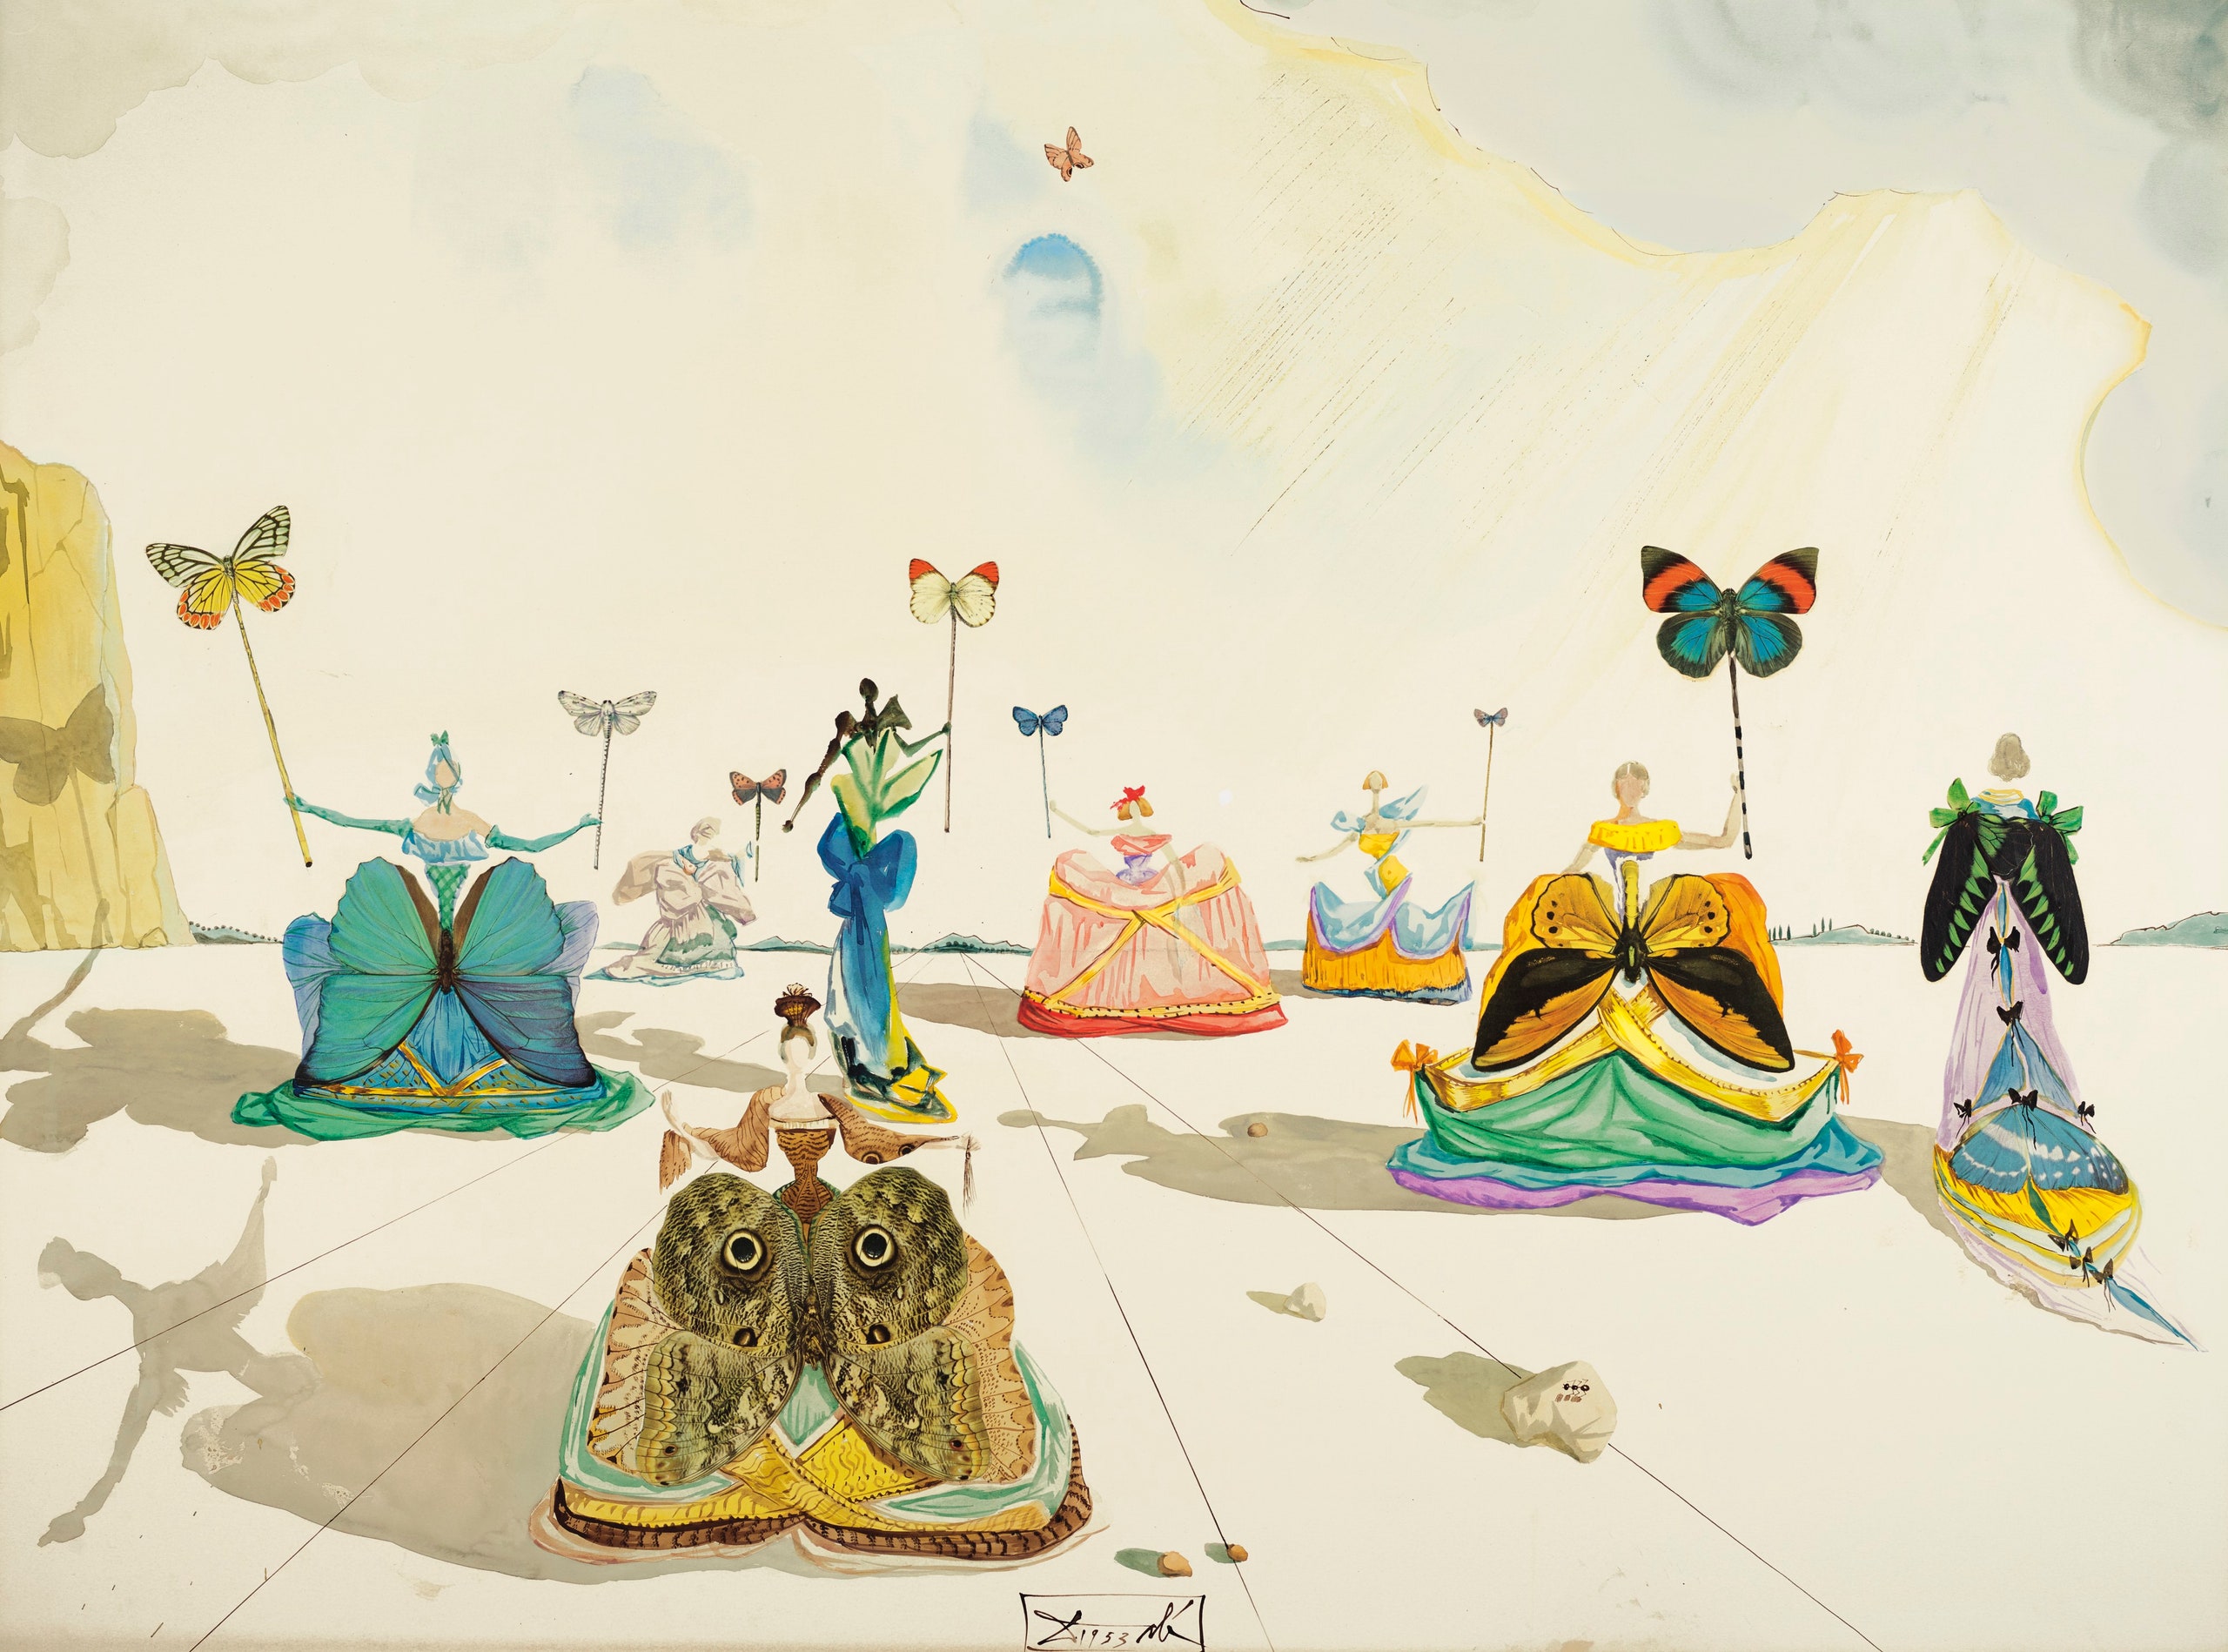 Tác phẩm Femmes aux Papillons của họa sỹ Salvador Dalí. Ảnh: Courtesy of Christie’s Images Ltd. 2019